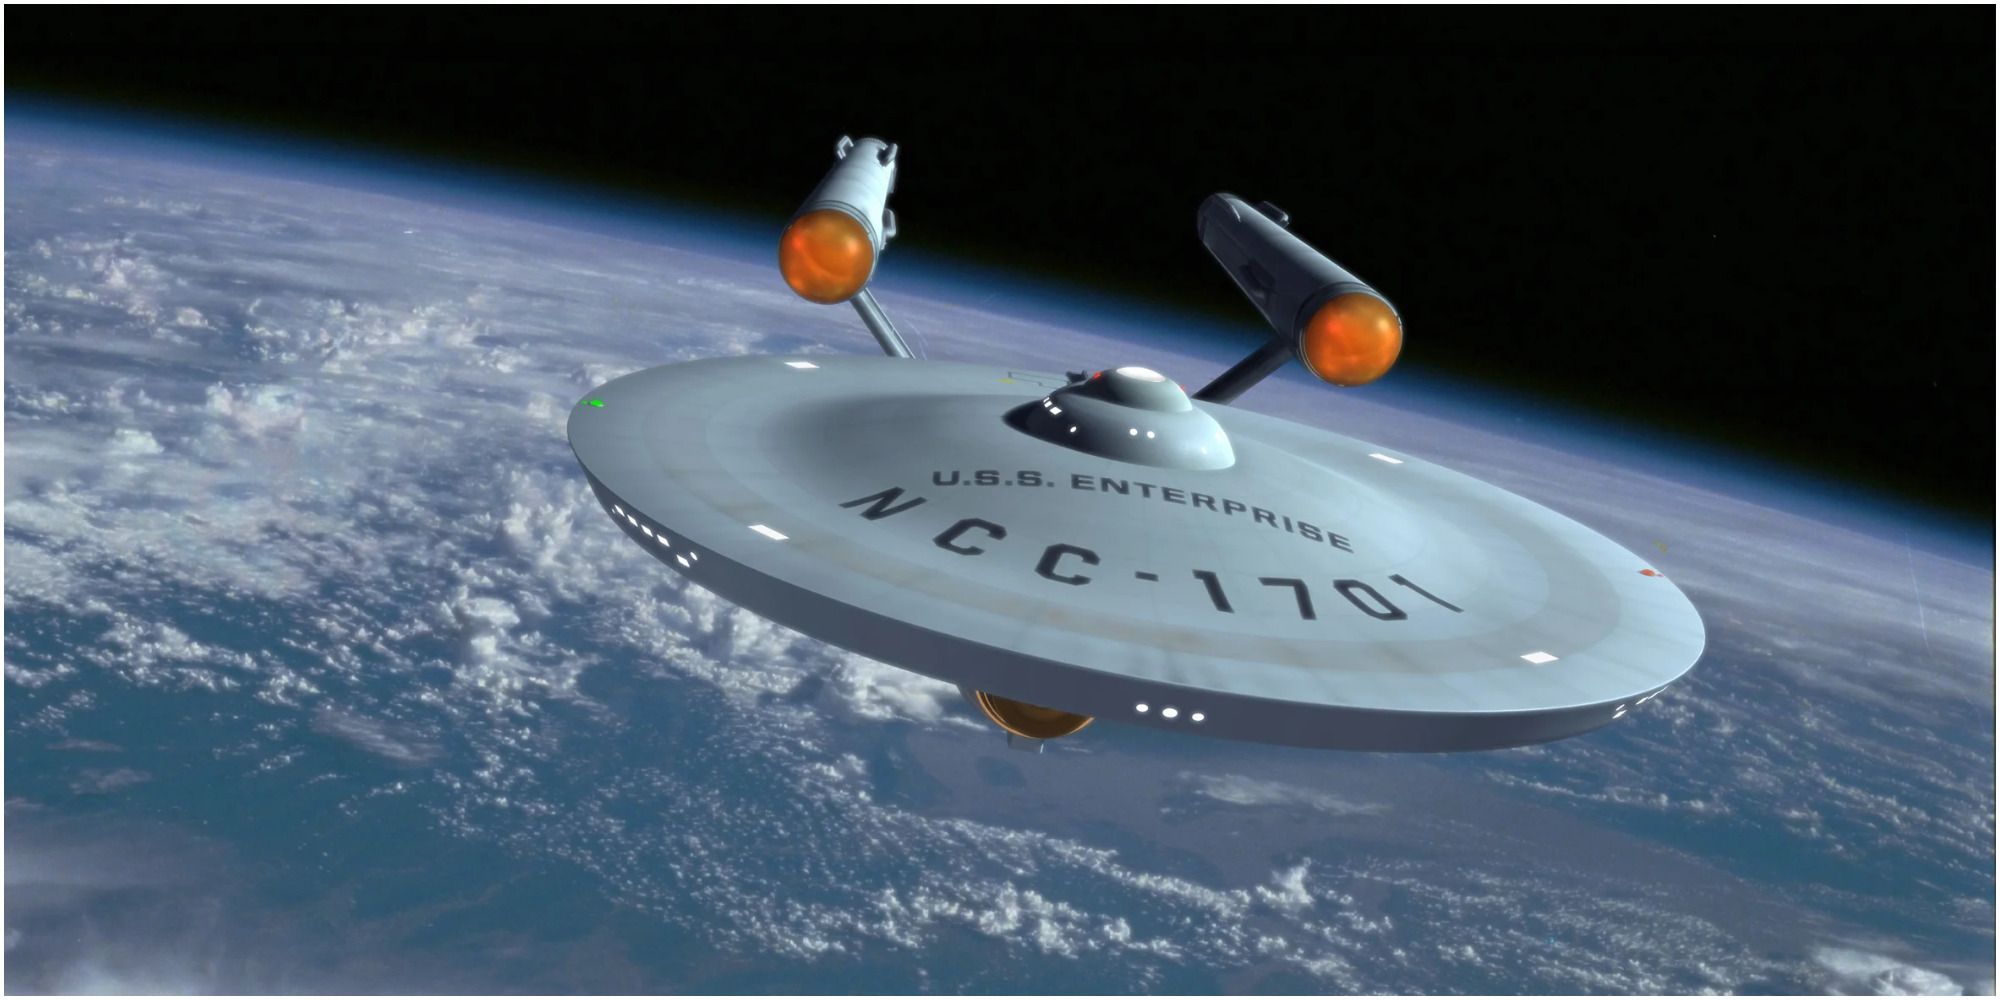 Star Trek: Where the Enterprise Got Its Name